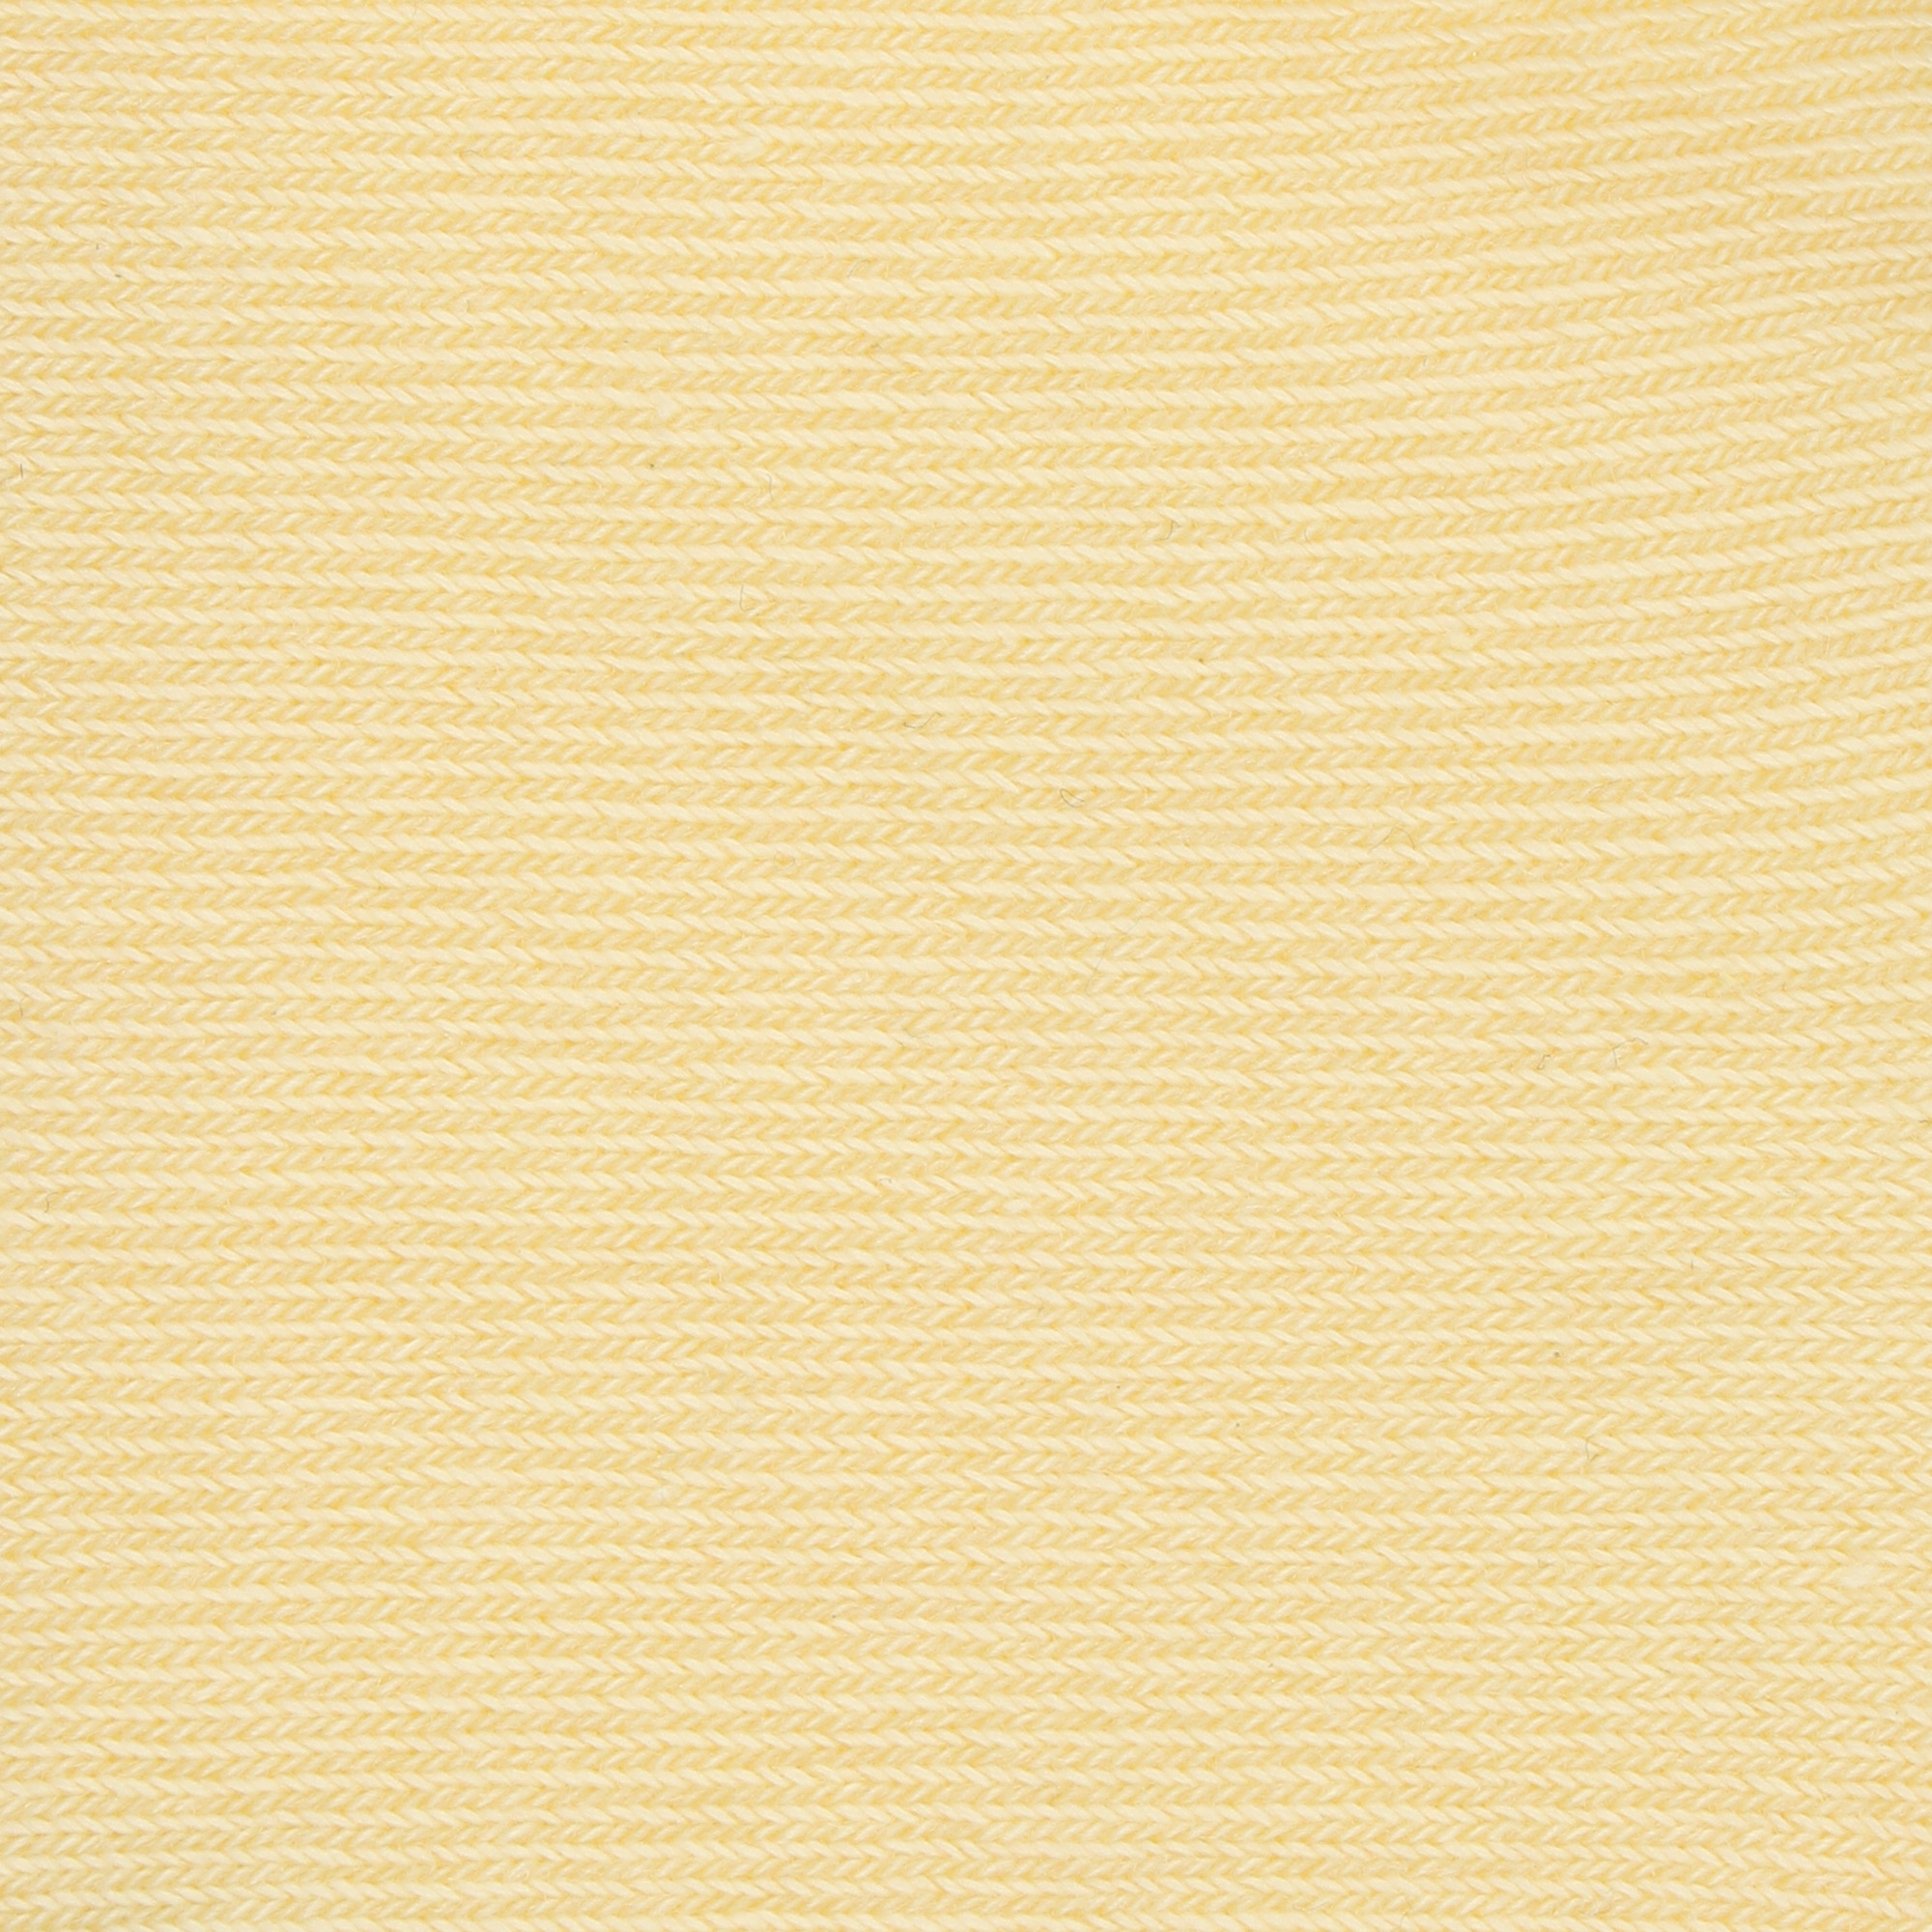 Носки женские Pierre Сardin cr maya желтый р 25 38-40, размер 38/40 - фото 2